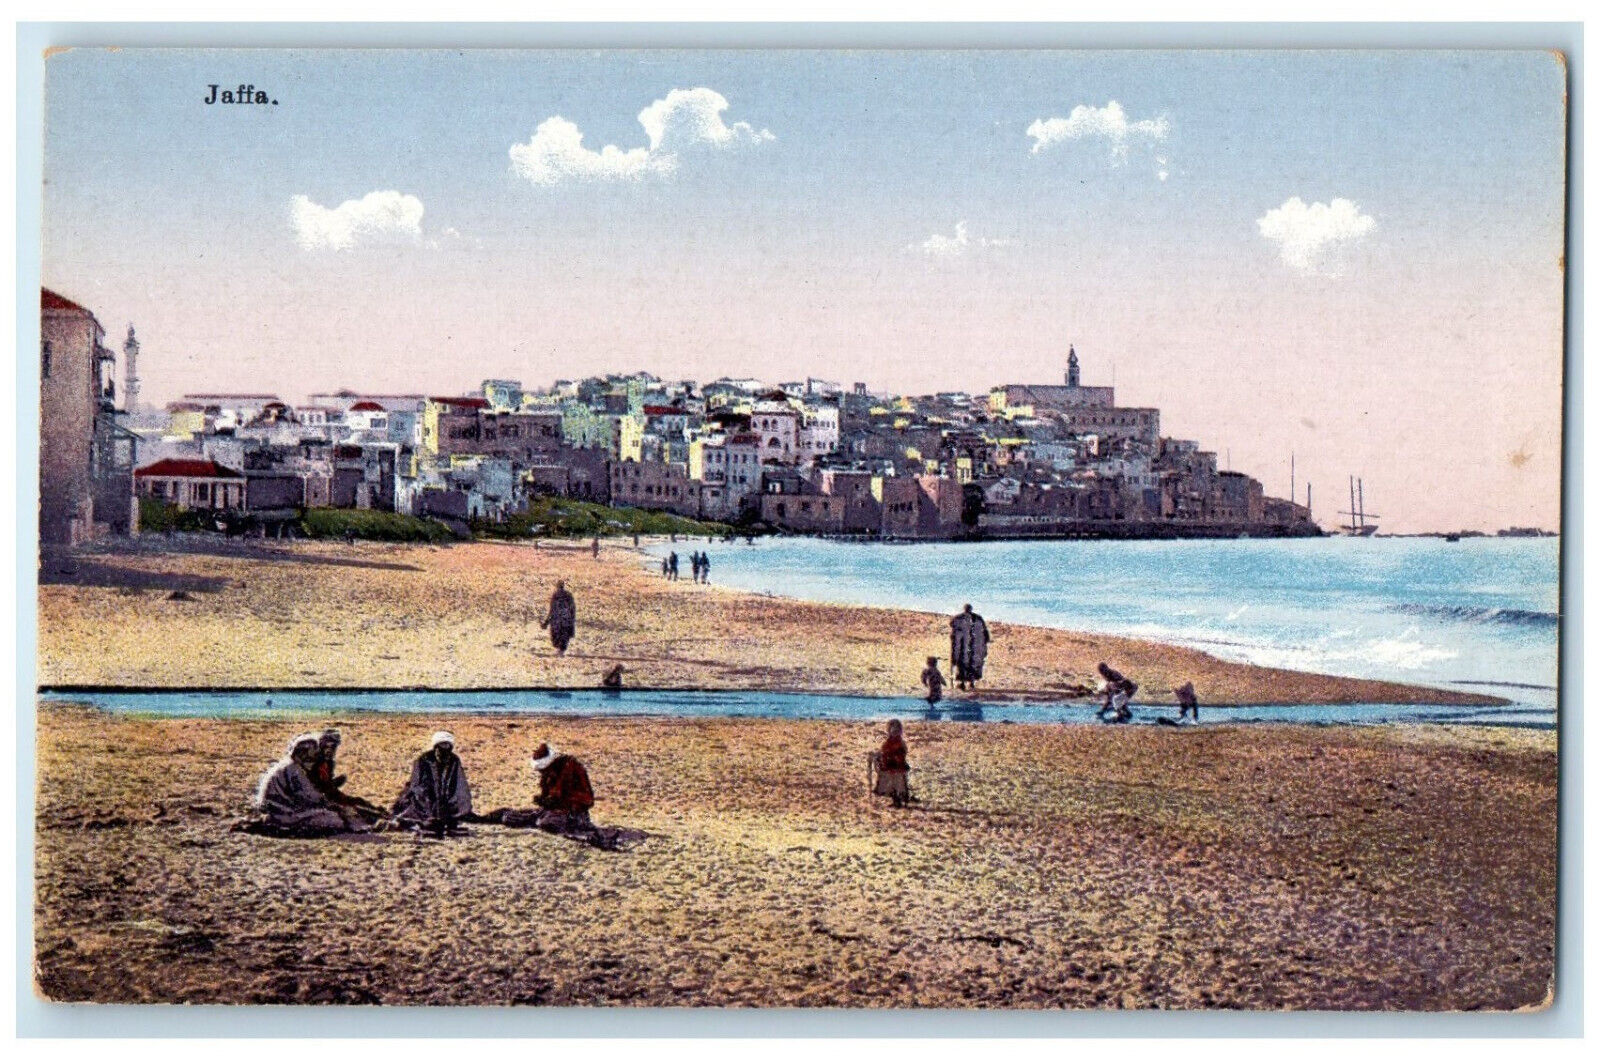 c1910 Scene of People in Sand Sea Waves Jaffa Tel Aviv-Yafo Israel Postcard